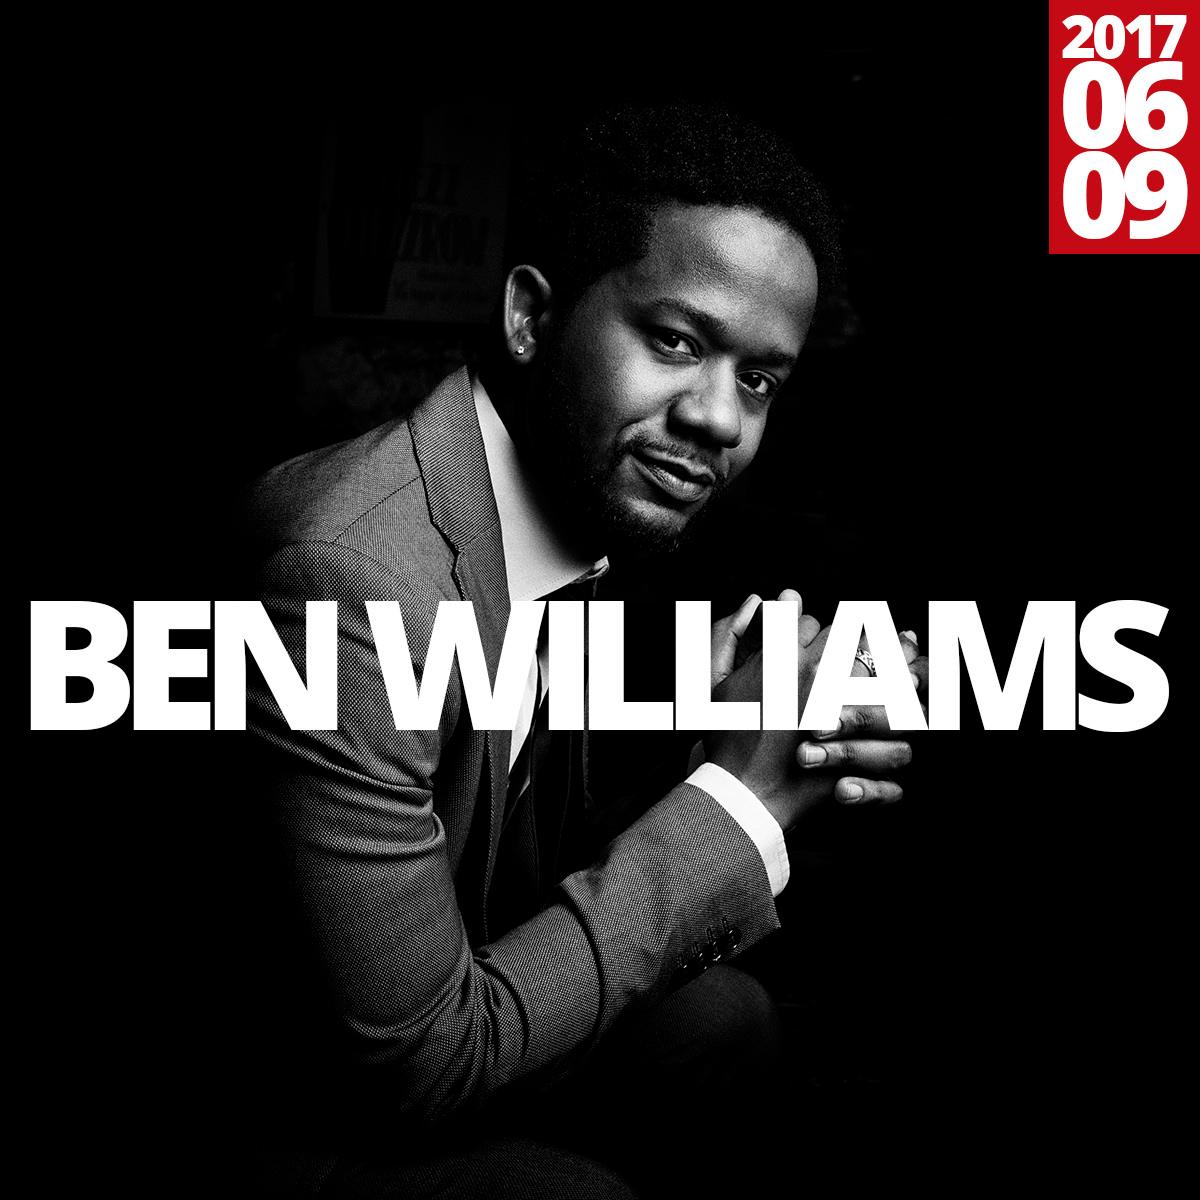 Ben Williams Concert, Budapest, 9 June